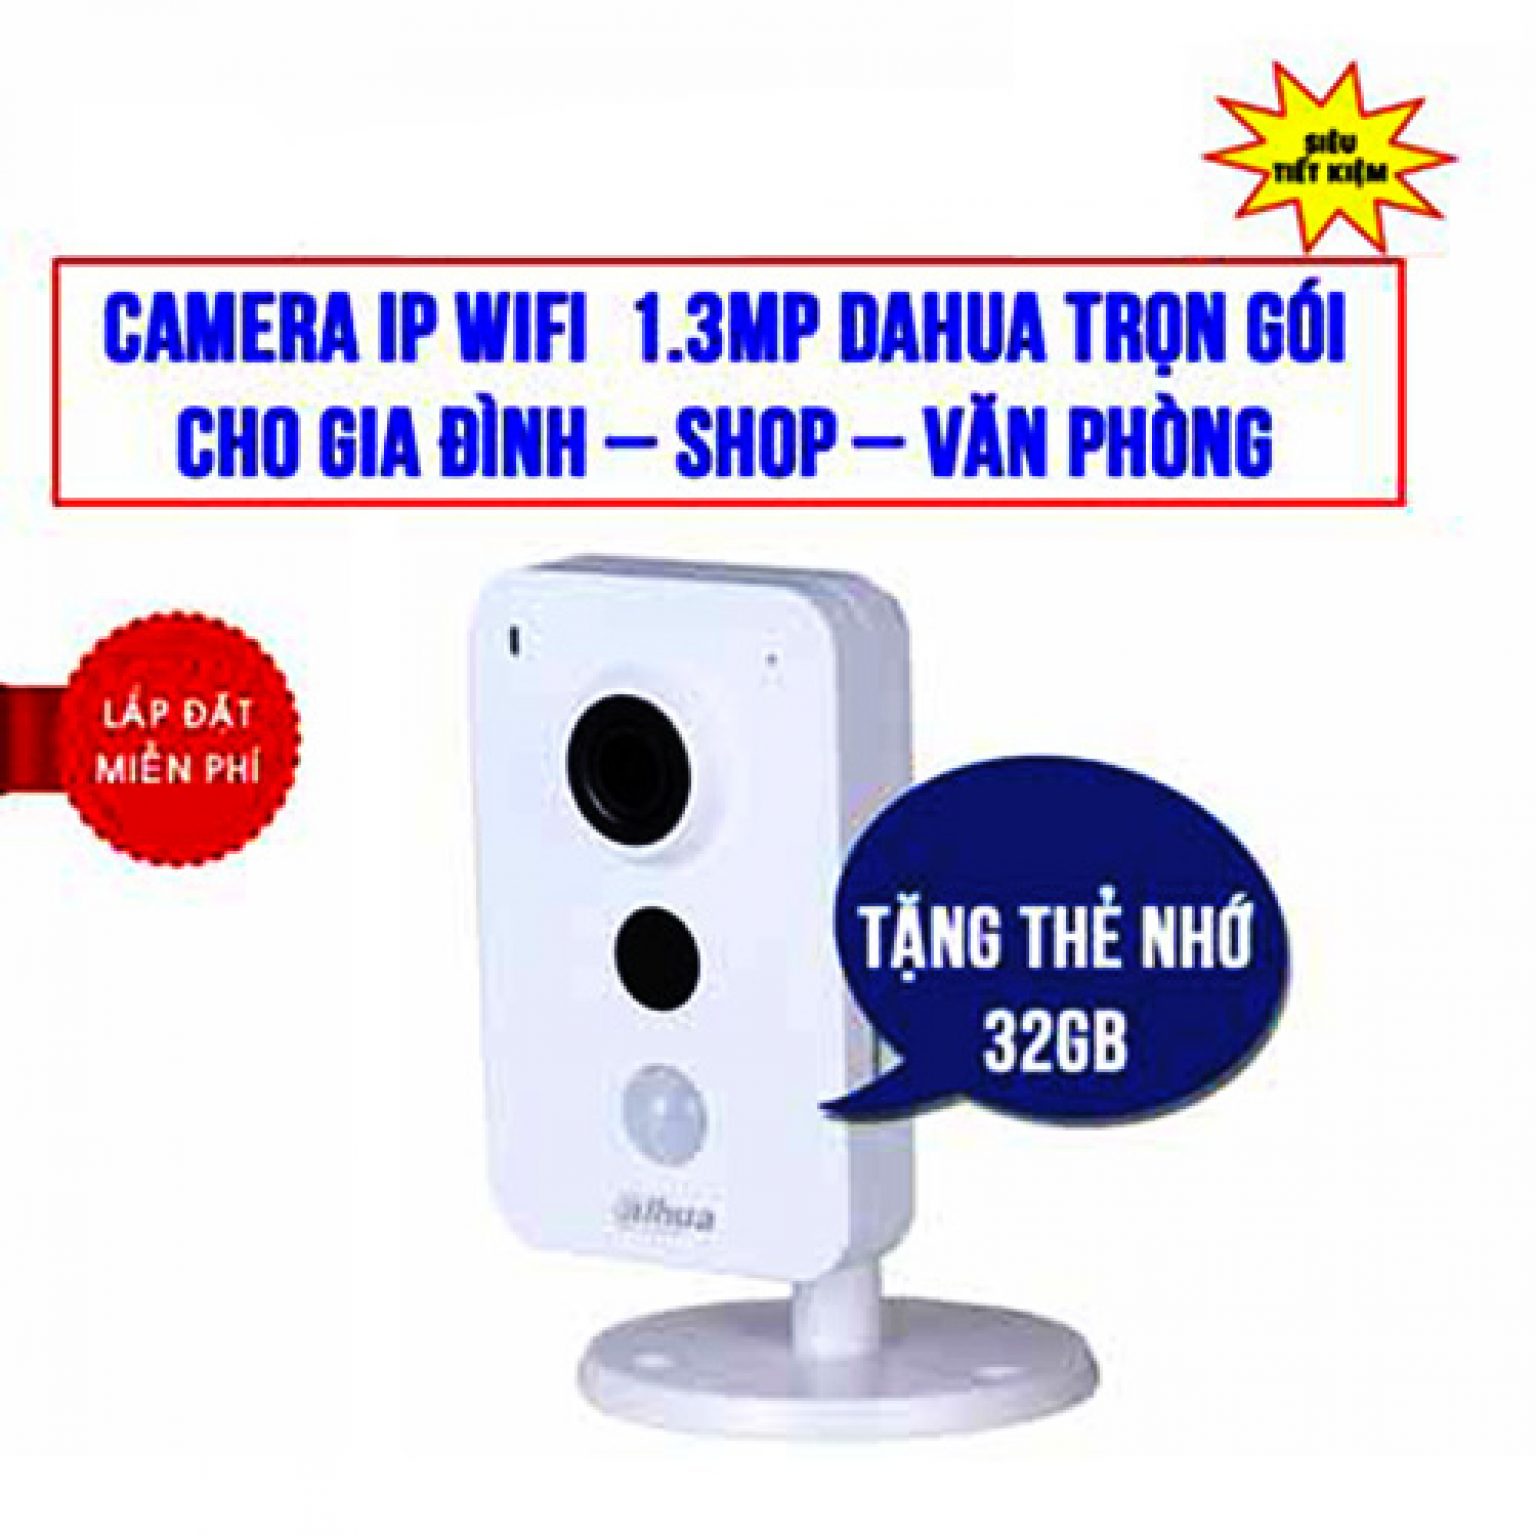 Trọn Bộ Camera Wifi 1.3MP Dahua DHI-K15P Giá Rẻ Đang Sale HOT